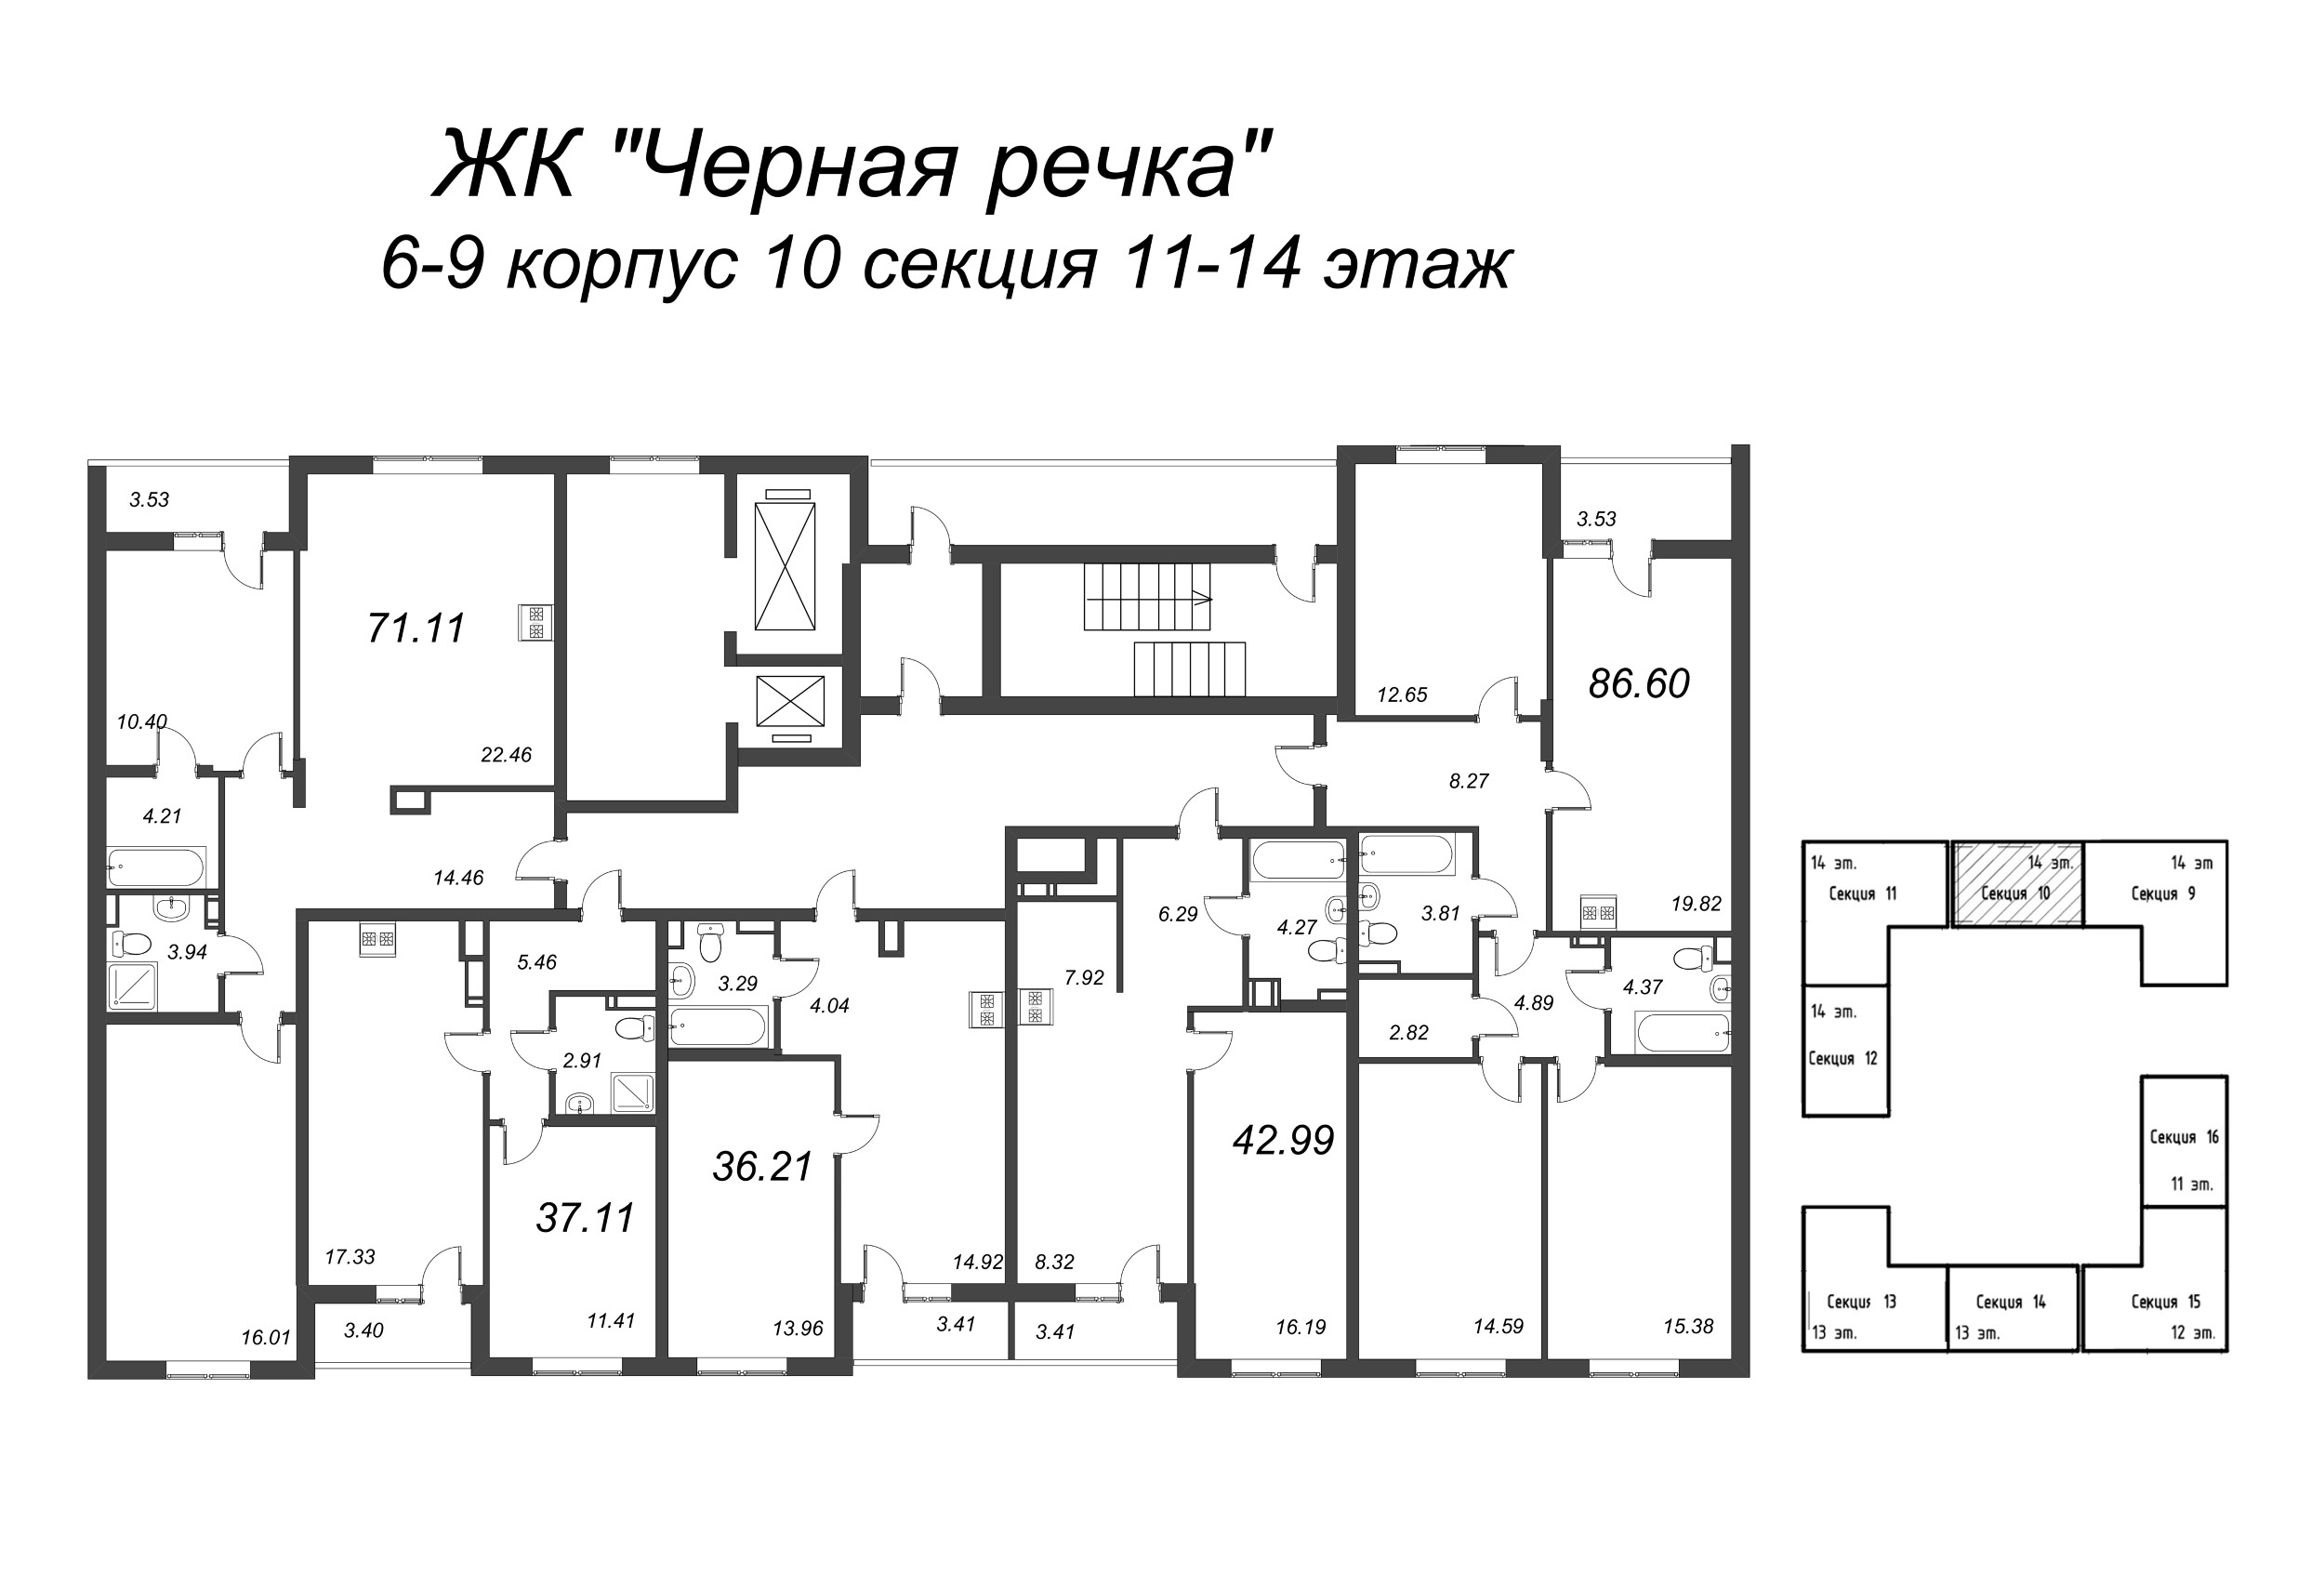 2-комнатная (Евро) квартира, 37.11 м² - планировка этажа